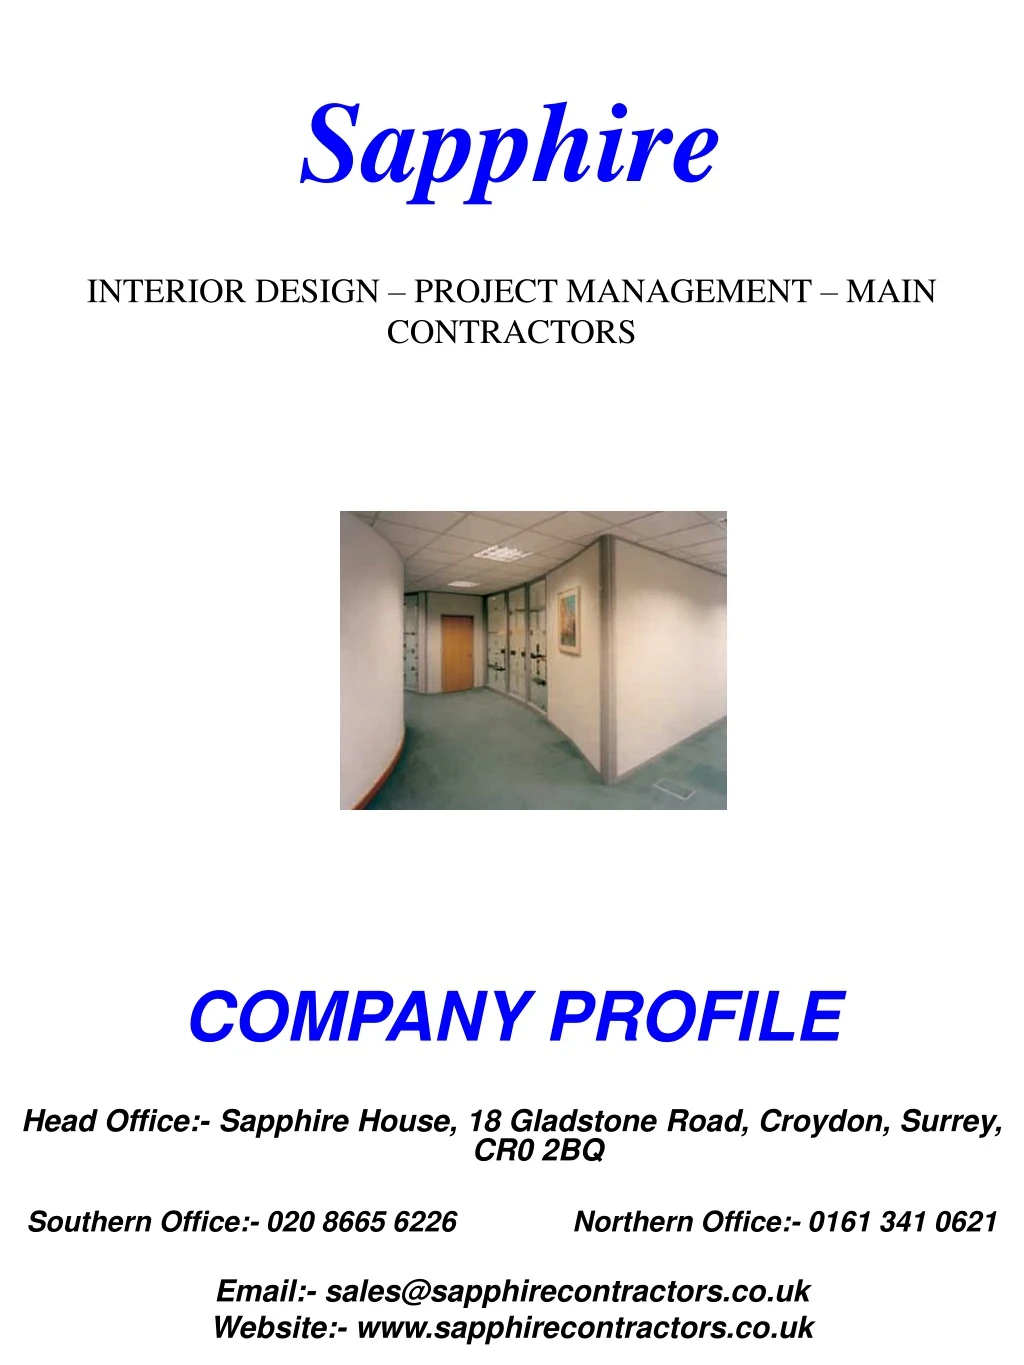 sapphire interior design project management main contractors